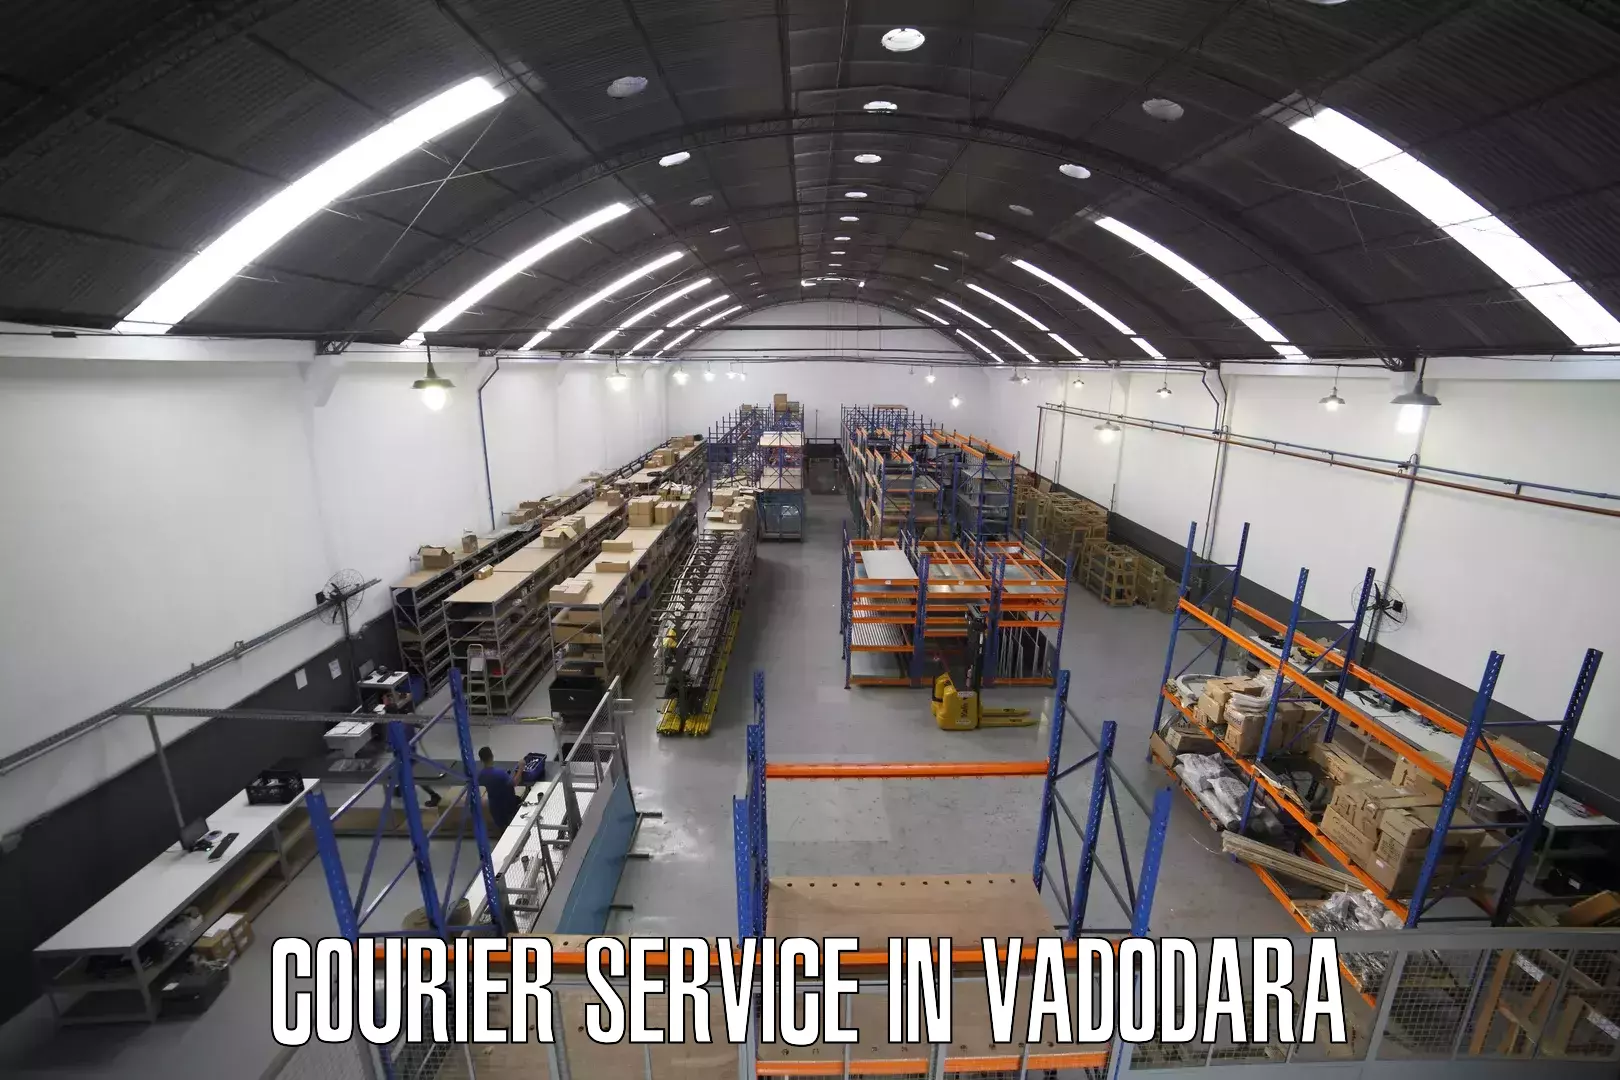 Customer-centric shipping in Vadodara